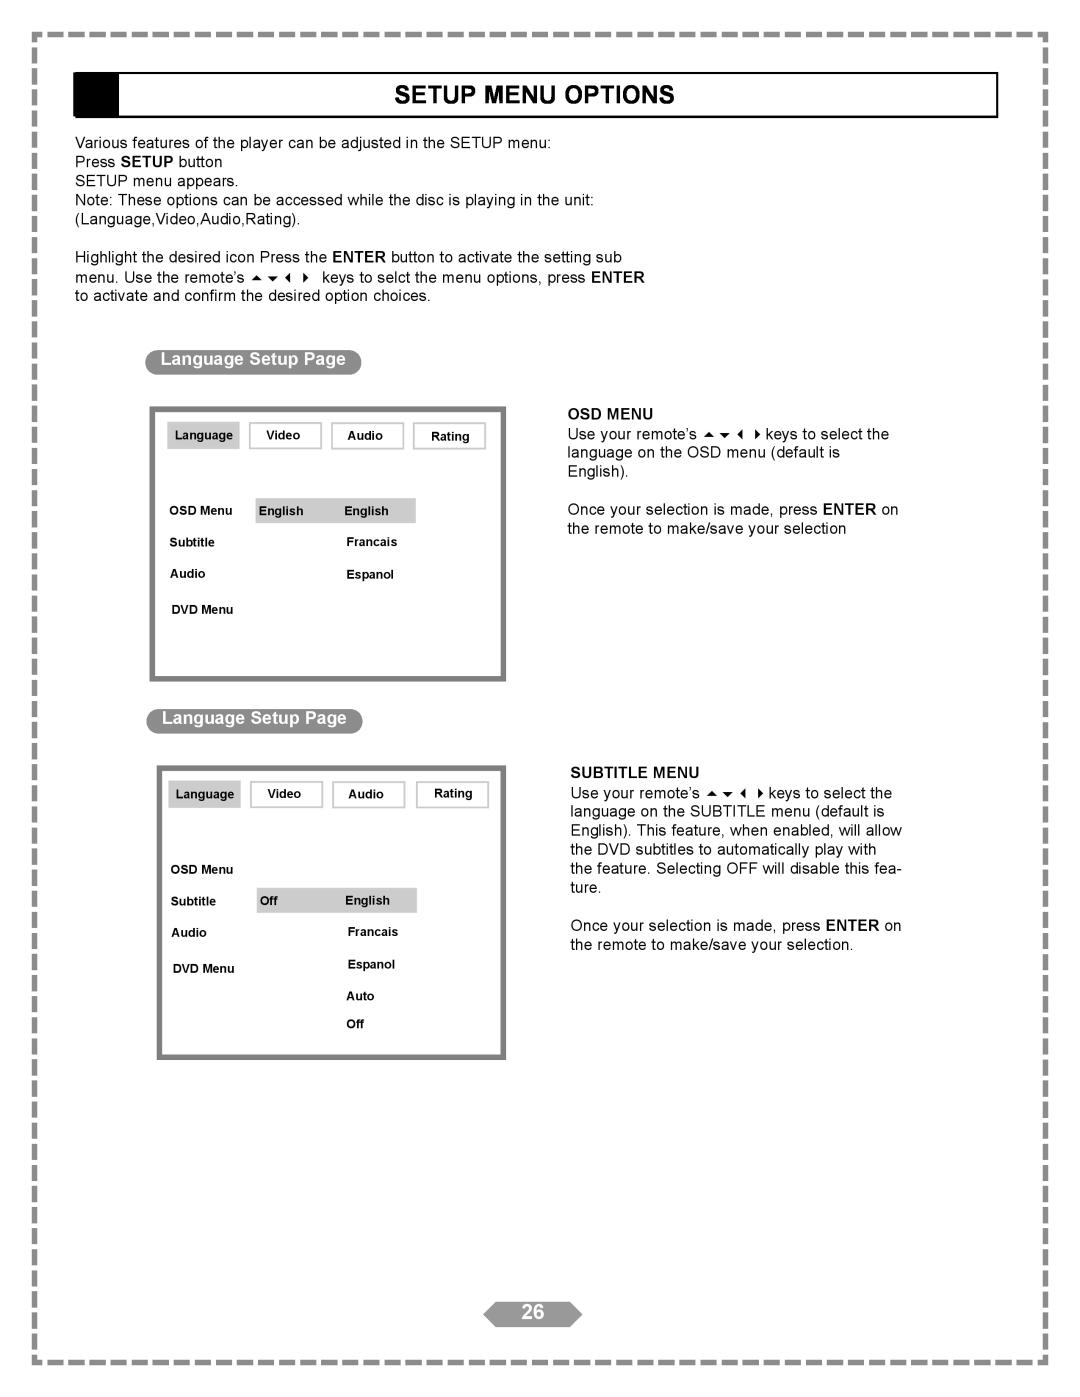 Apex Digital HT-175 manual Setup Menu Options, Language Setup Page, General Setup Page 